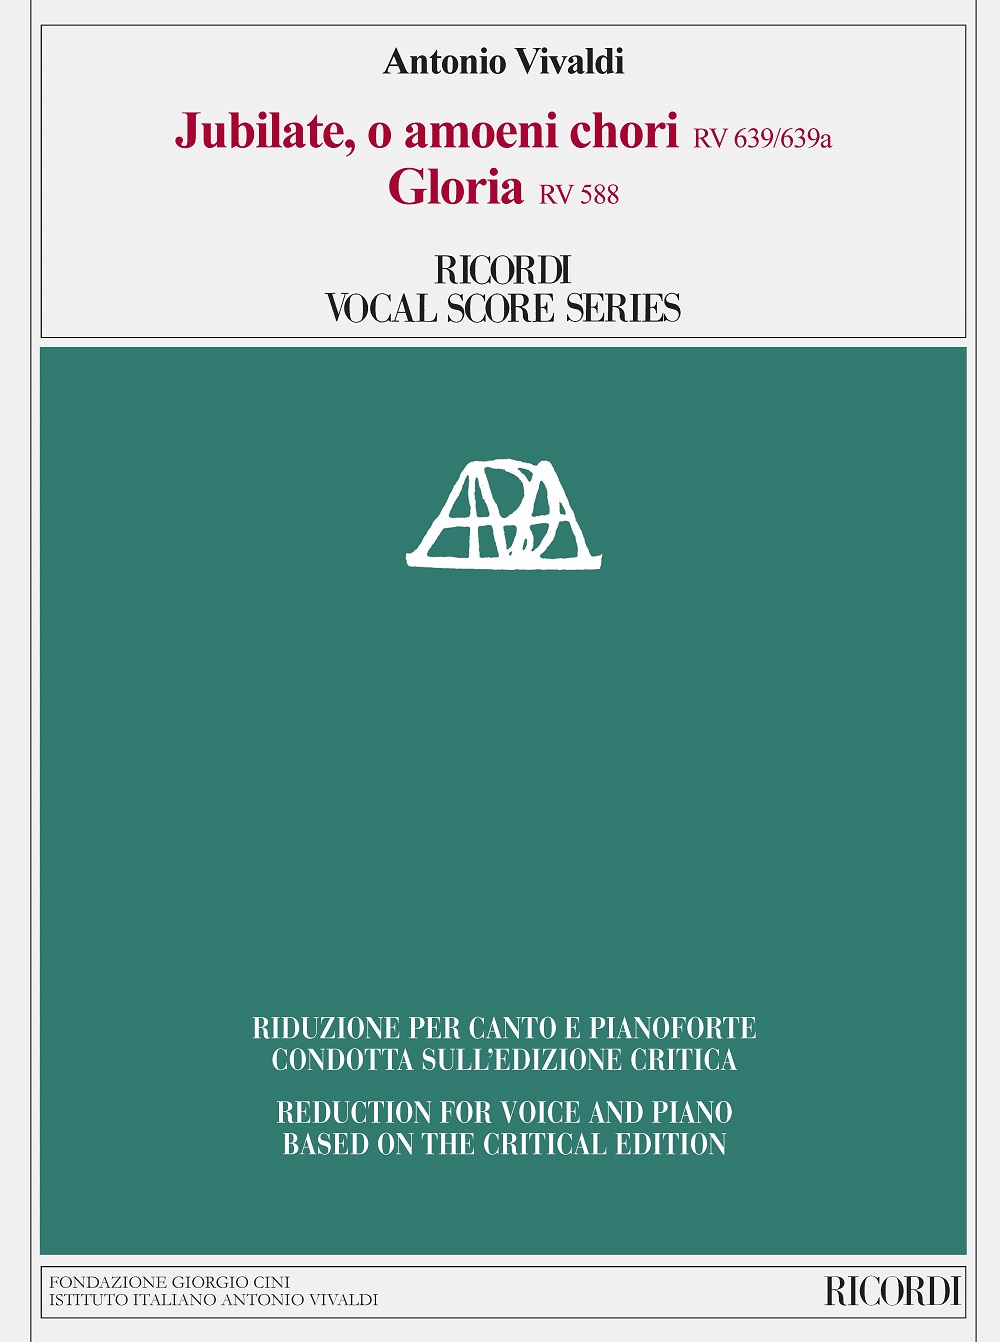 Antonio Vivaldi: Jubilate  o amoeni RV 639/639a - Gloria  RV 588: Voice